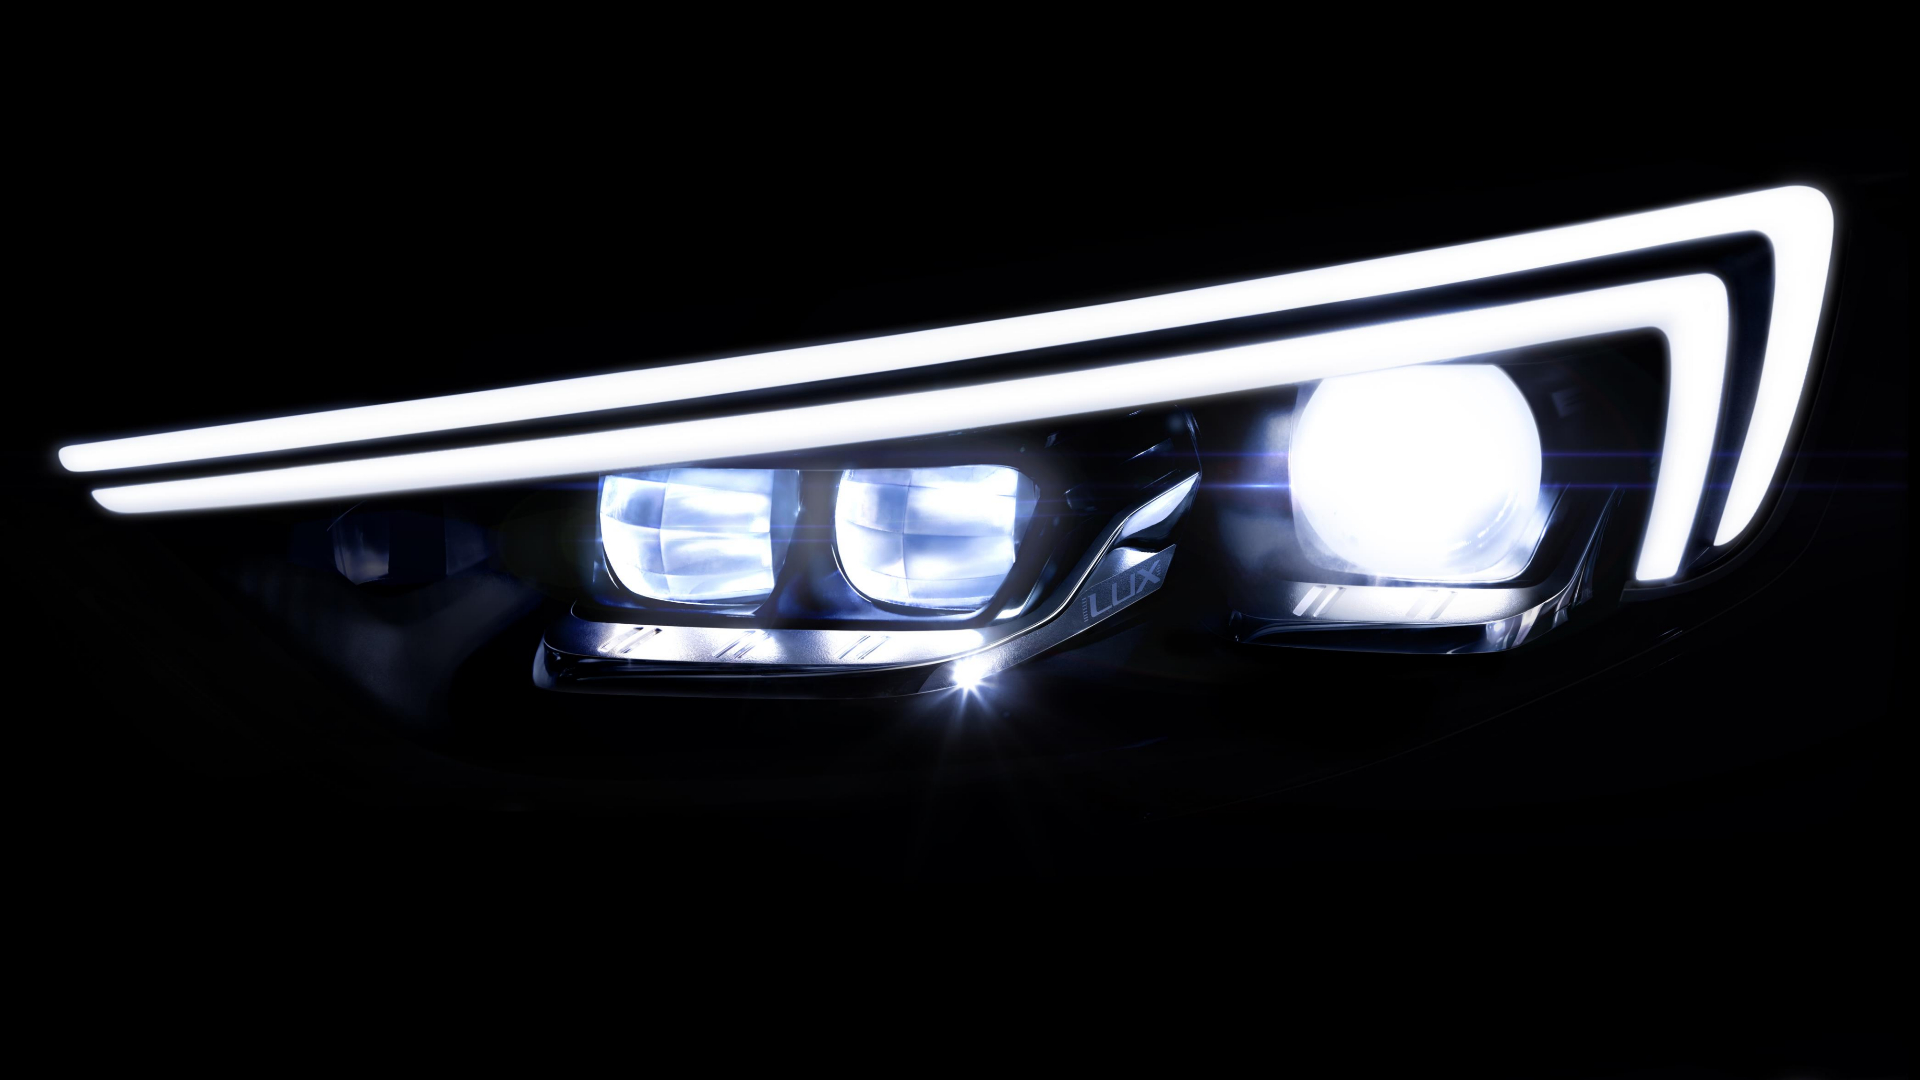 Are modern car headlights too bright?